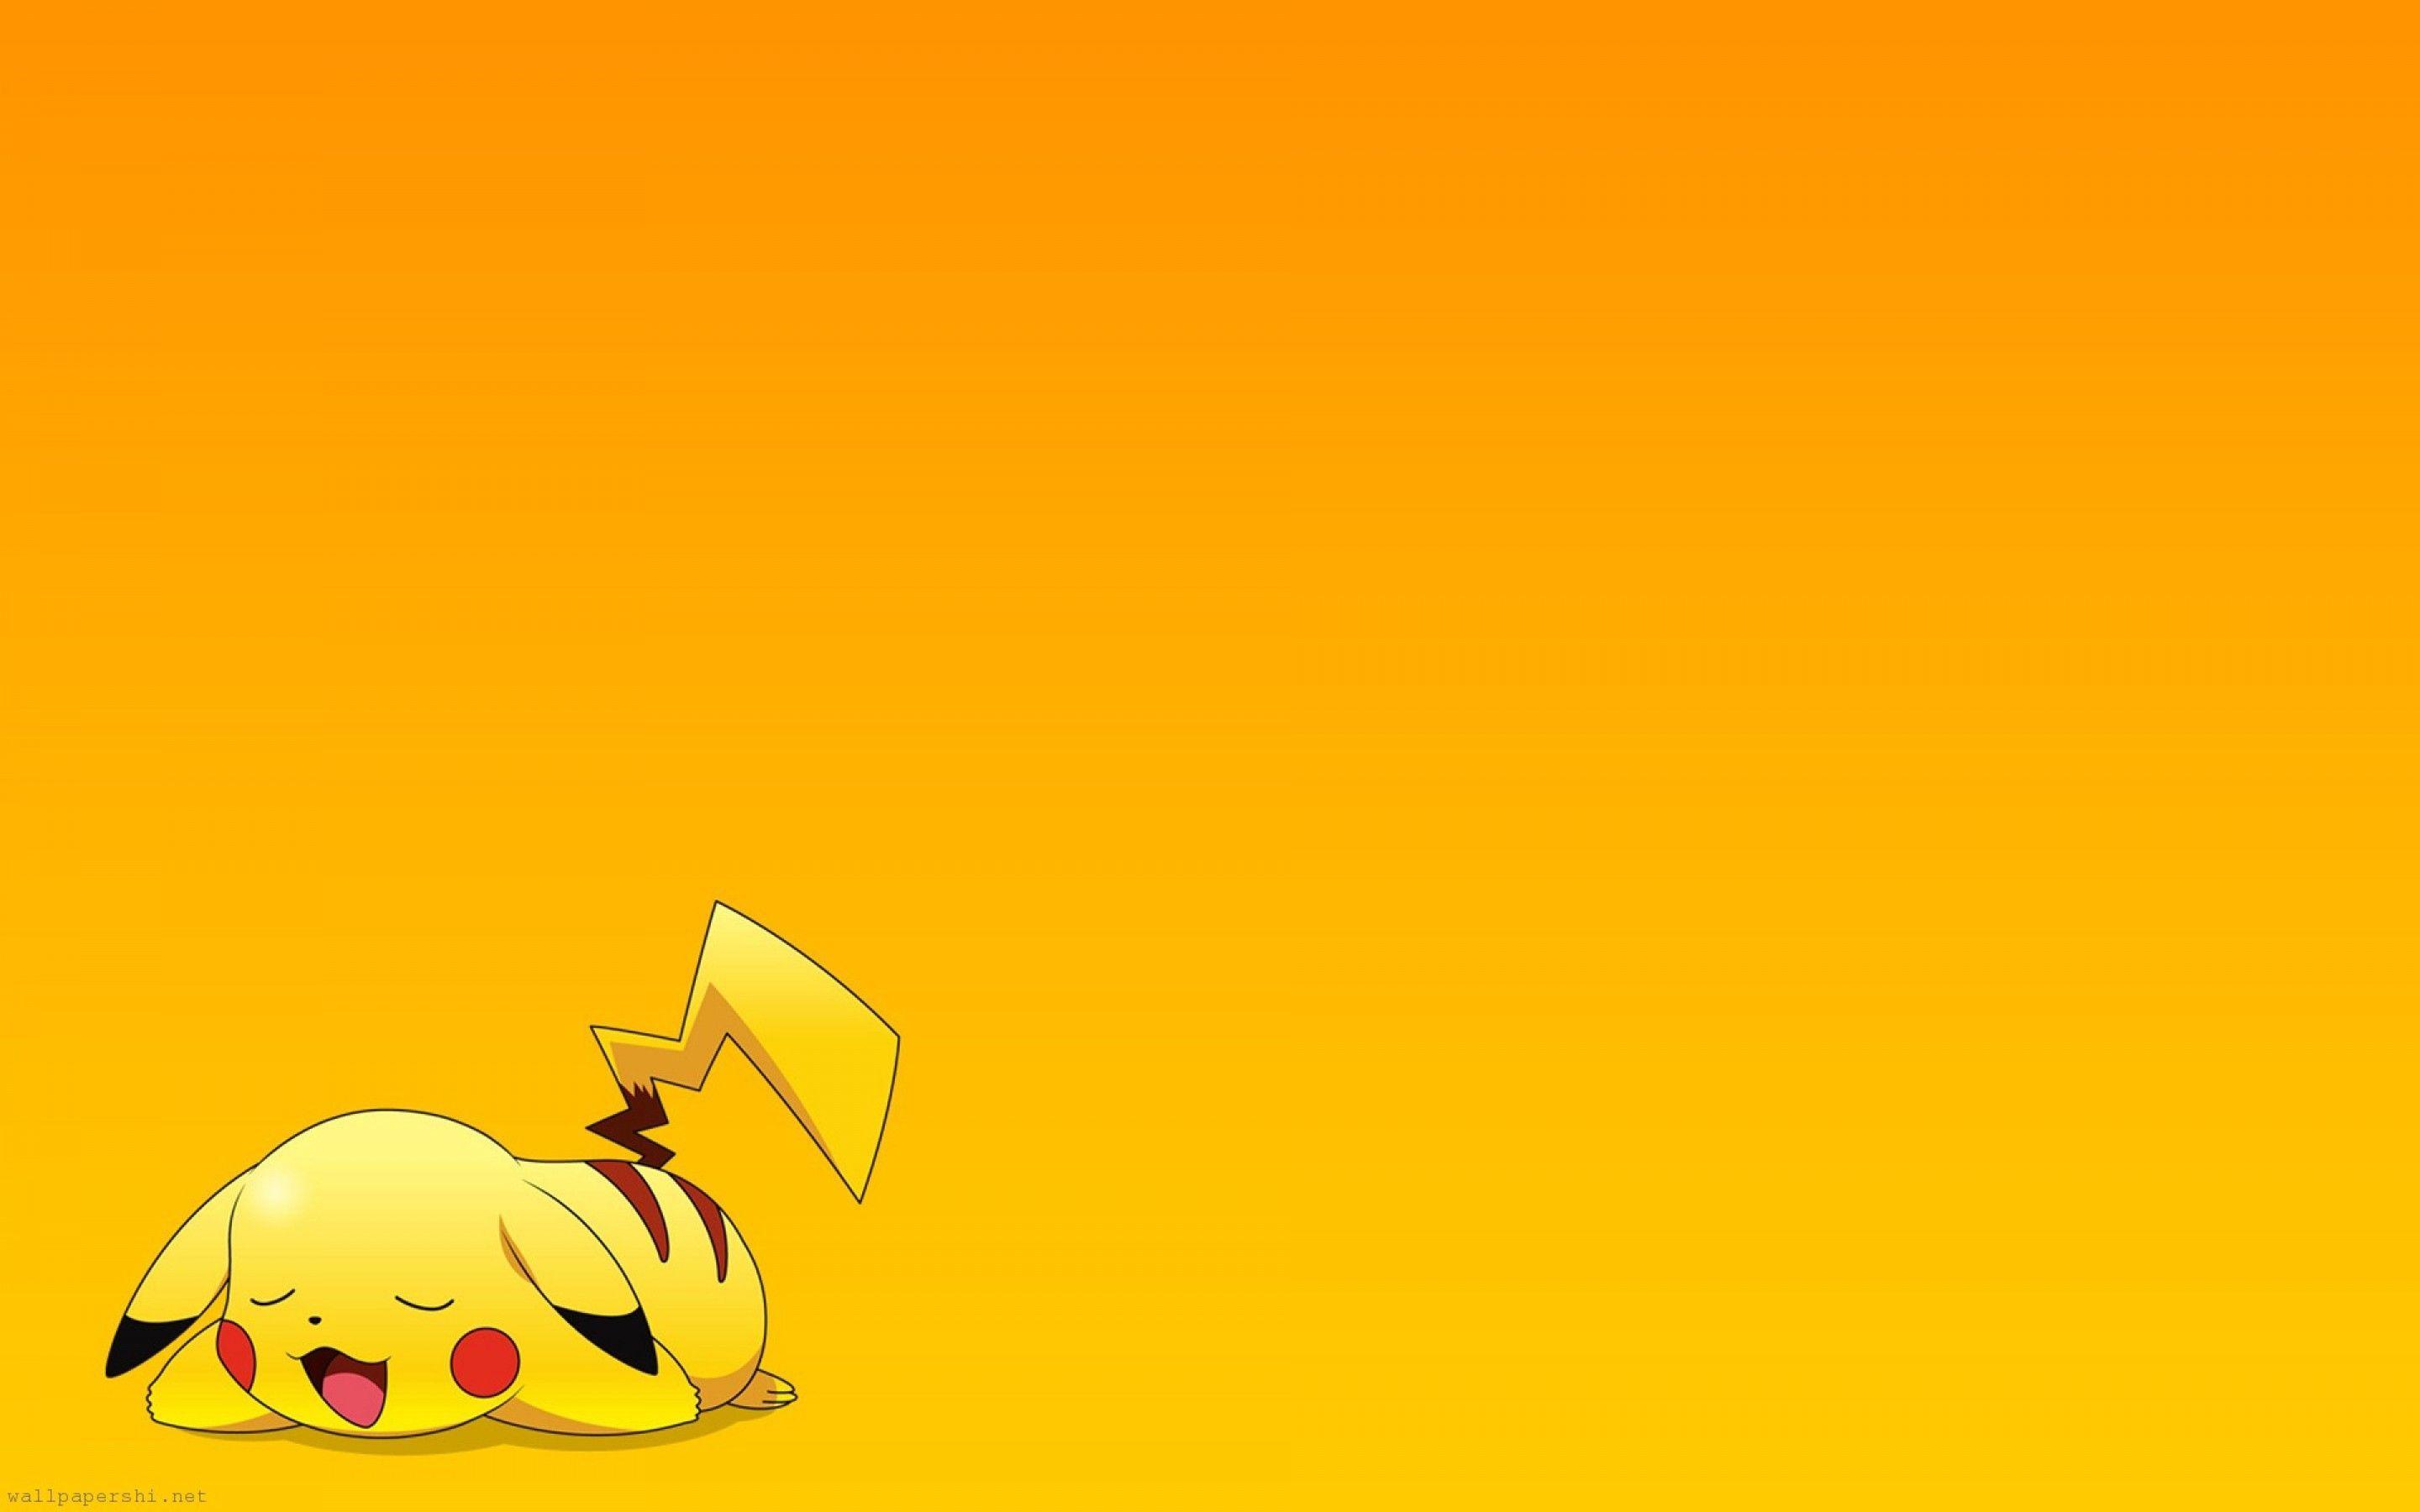 Pikachu Background. Epic Pikachu Wallpaper, Awsome Pikachu Wallpaper and Adorable Pikachu Wallpaper